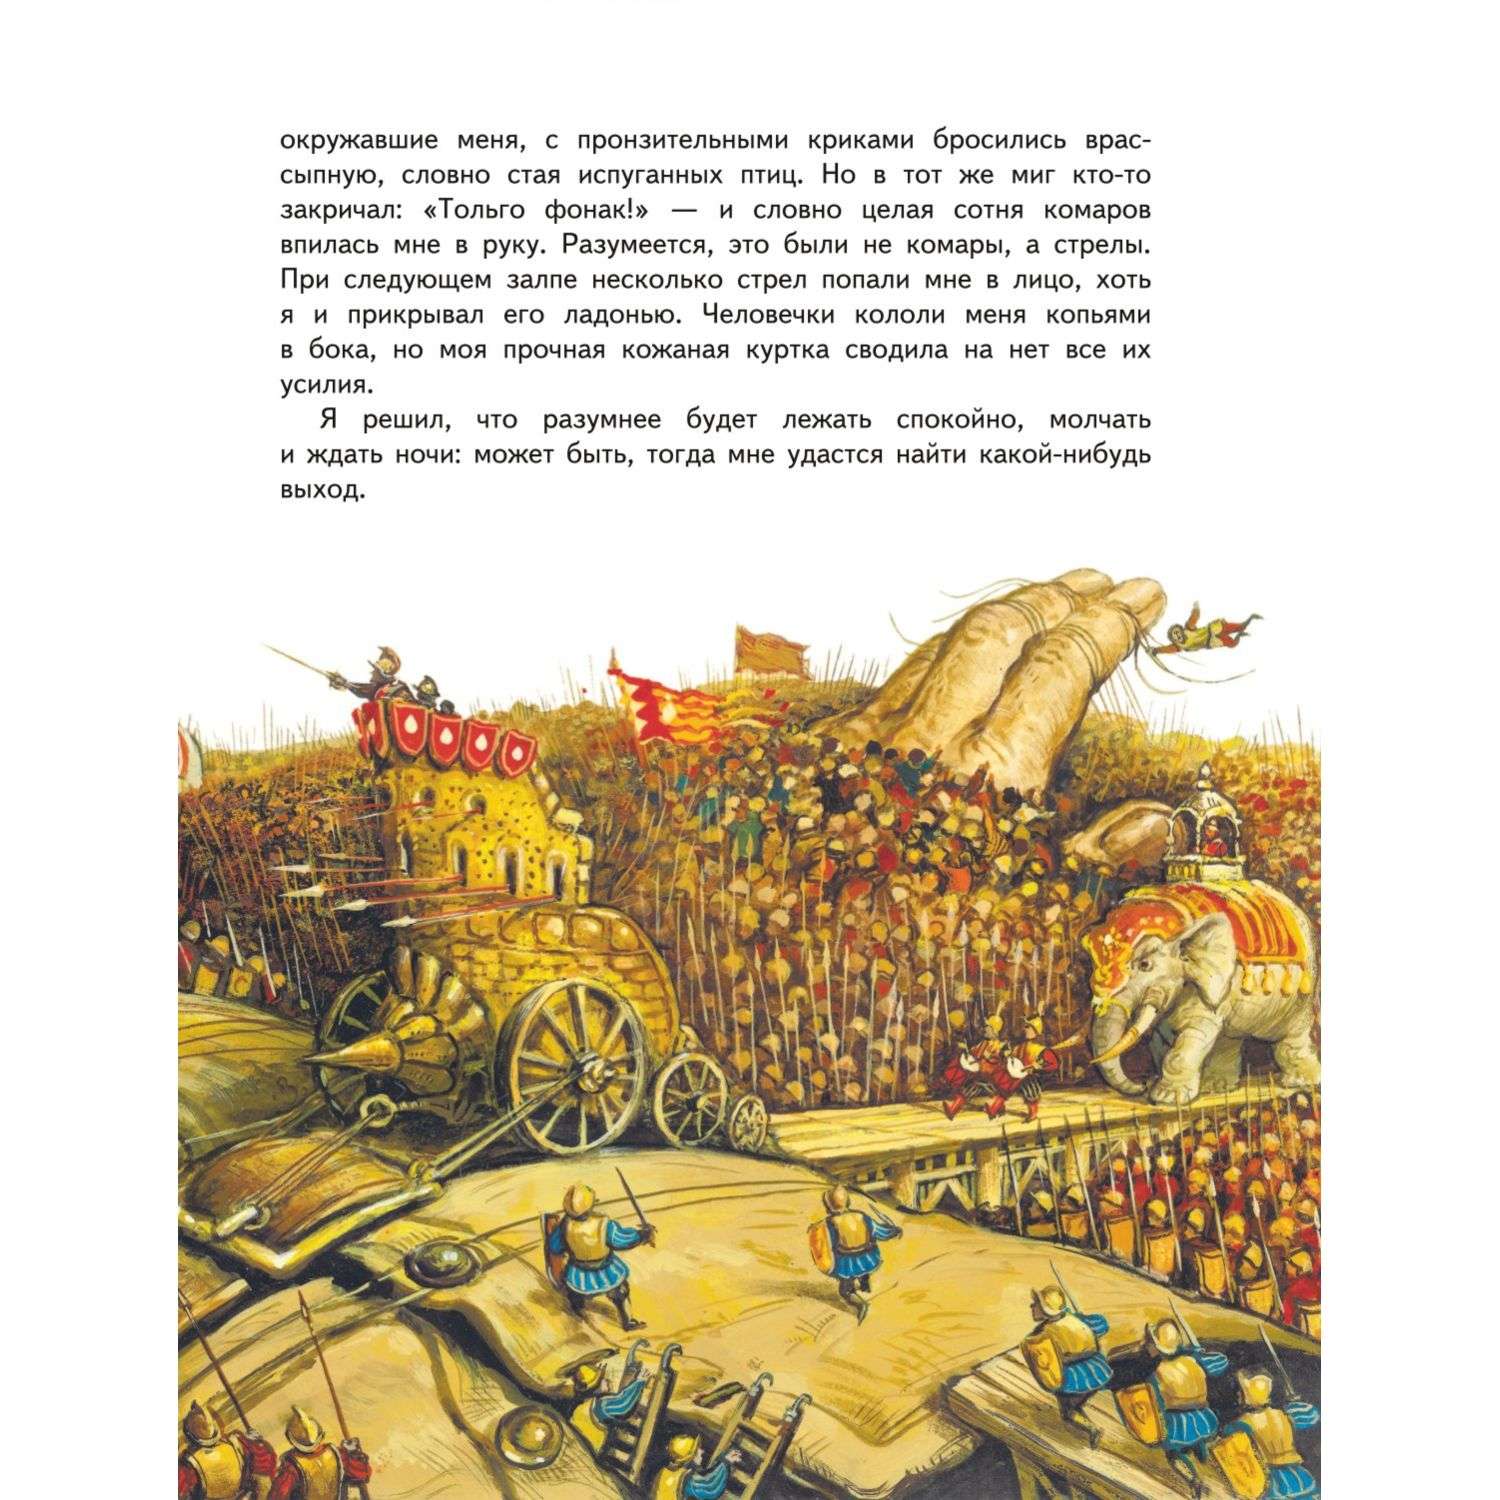 Книга Гулливер в стране лилипутов иллюстрации А.Симанчука - фото 7